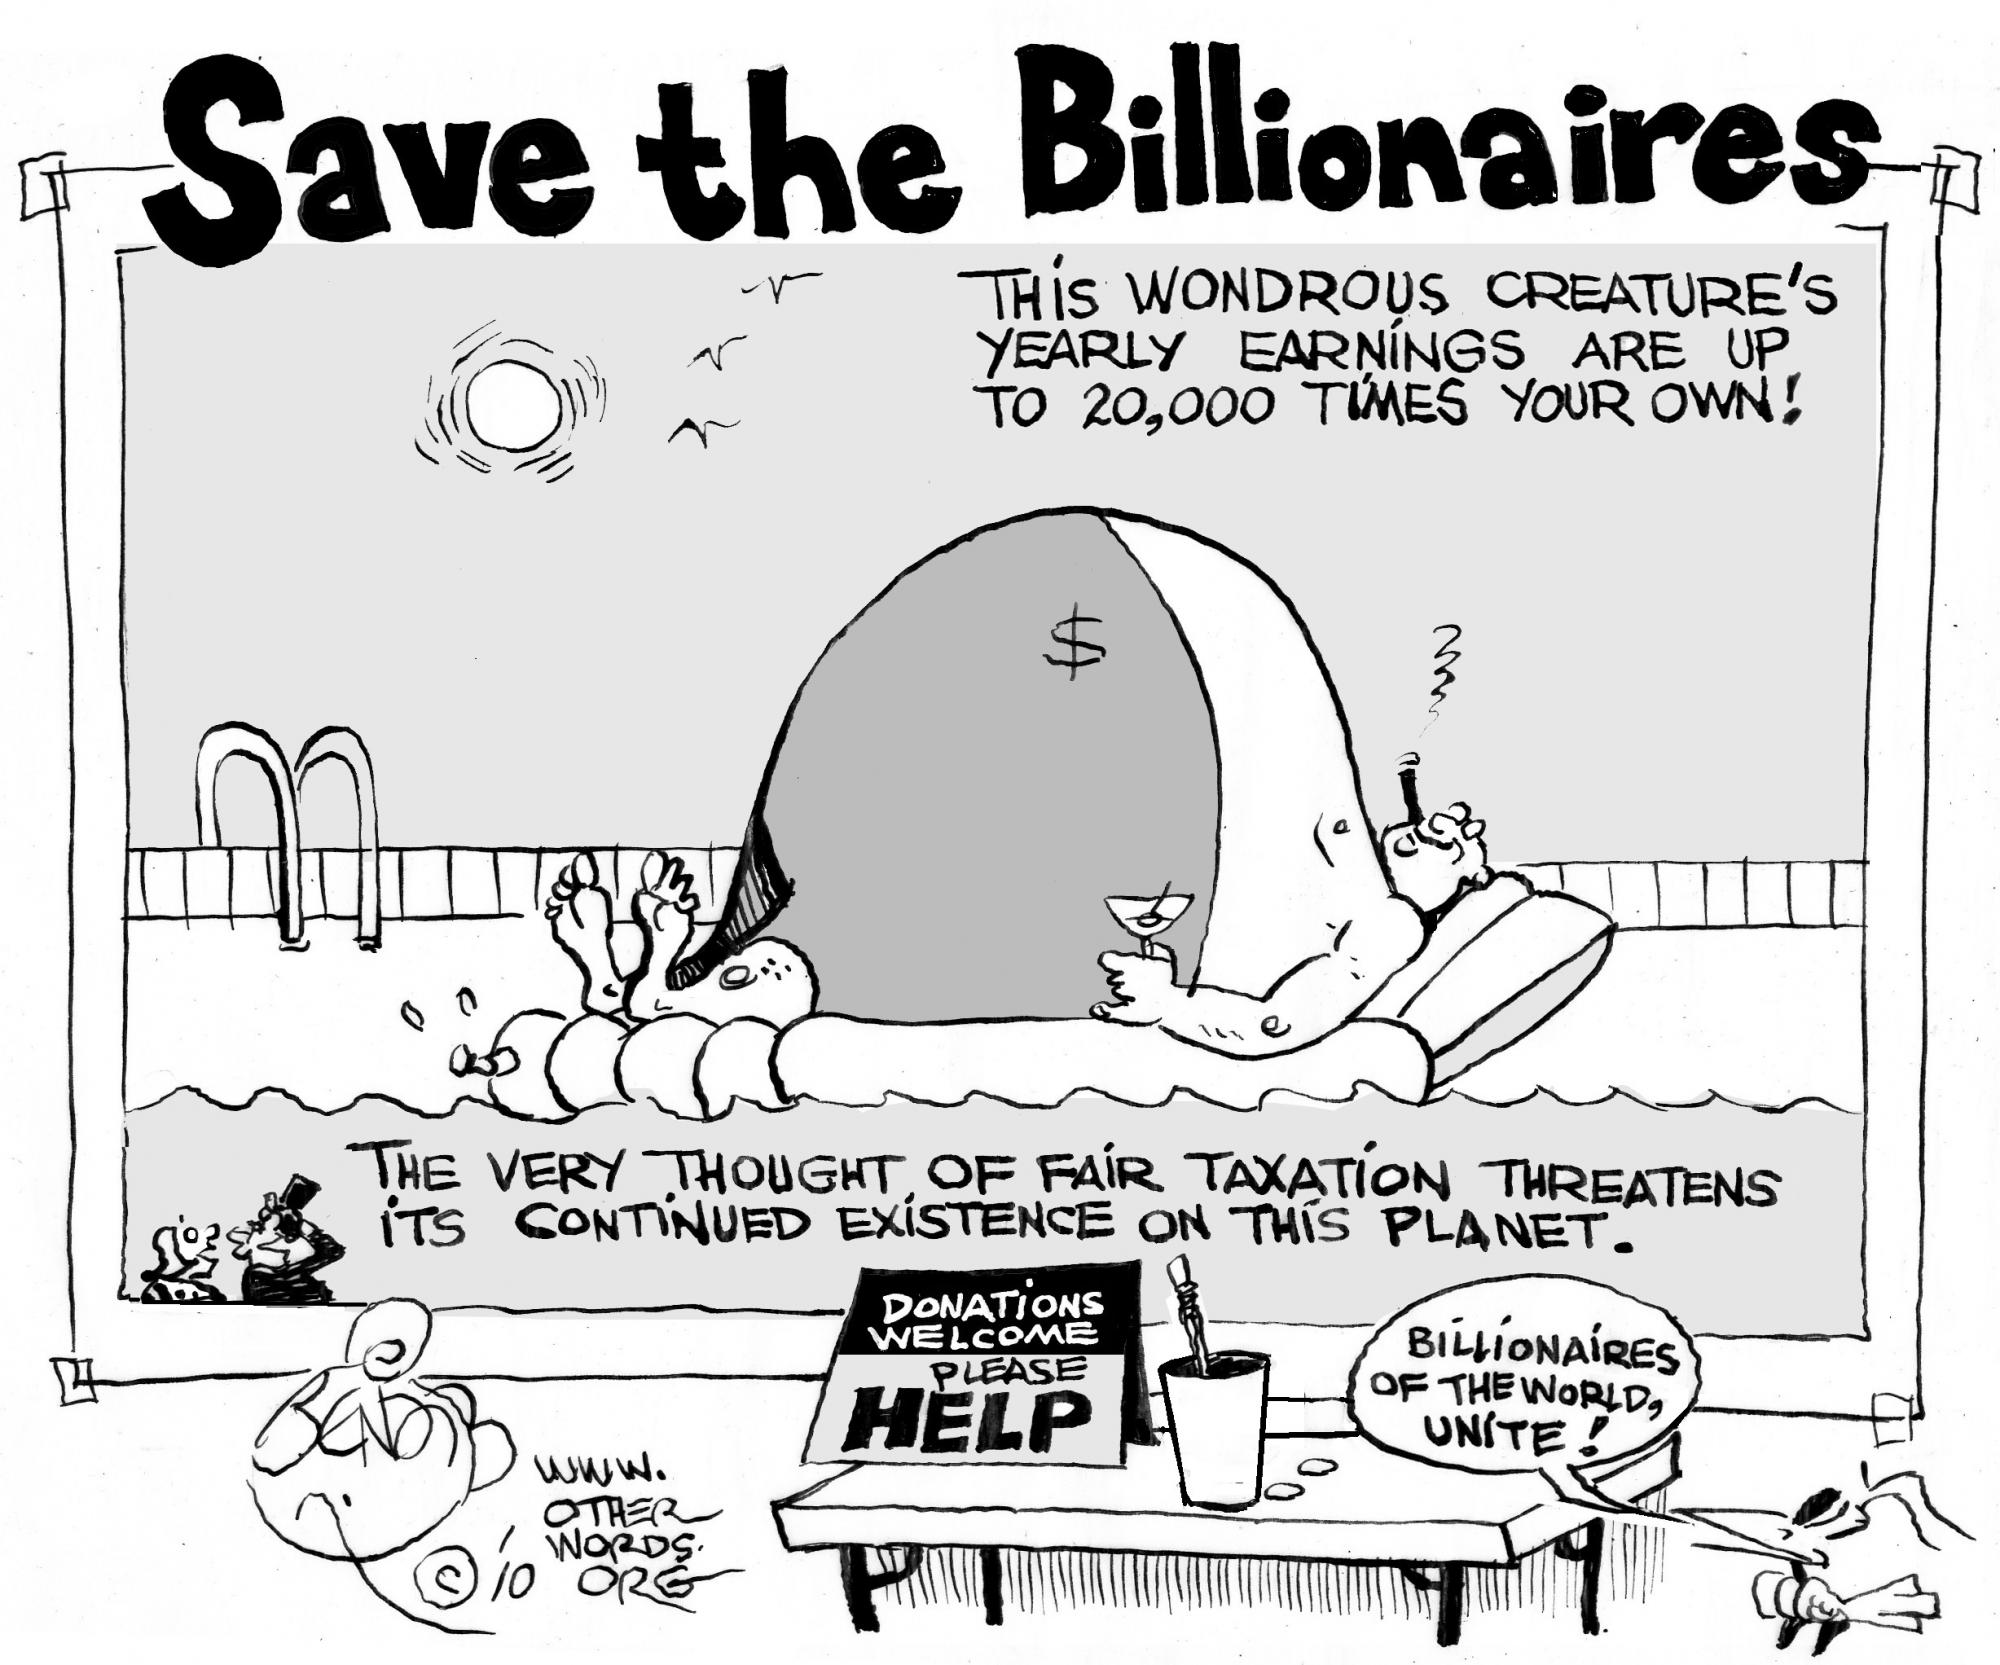 Save the Billionaires